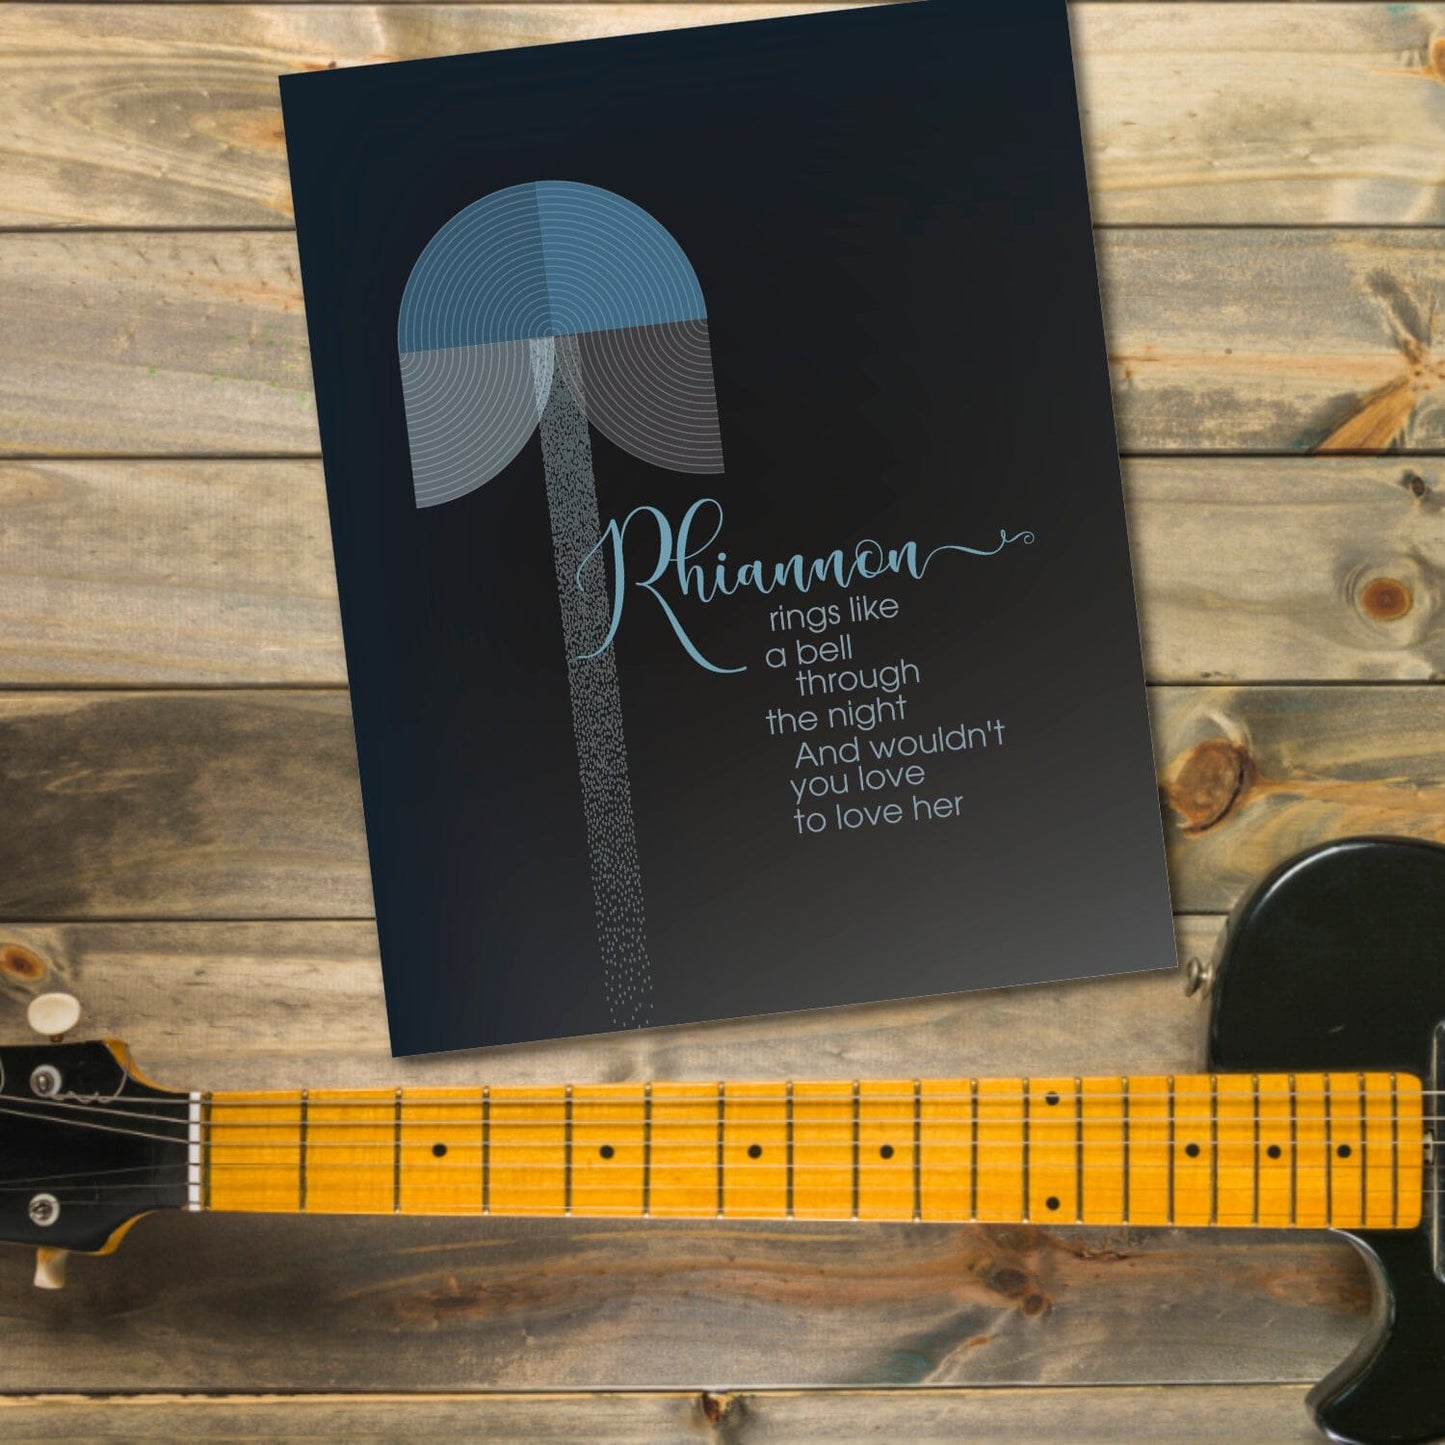 Rhiannon by Fleetwood Mac - Song Lyrics Rock Music Print Song Lyrics Art Song Lyrics Art 8x10 Unframed Print 